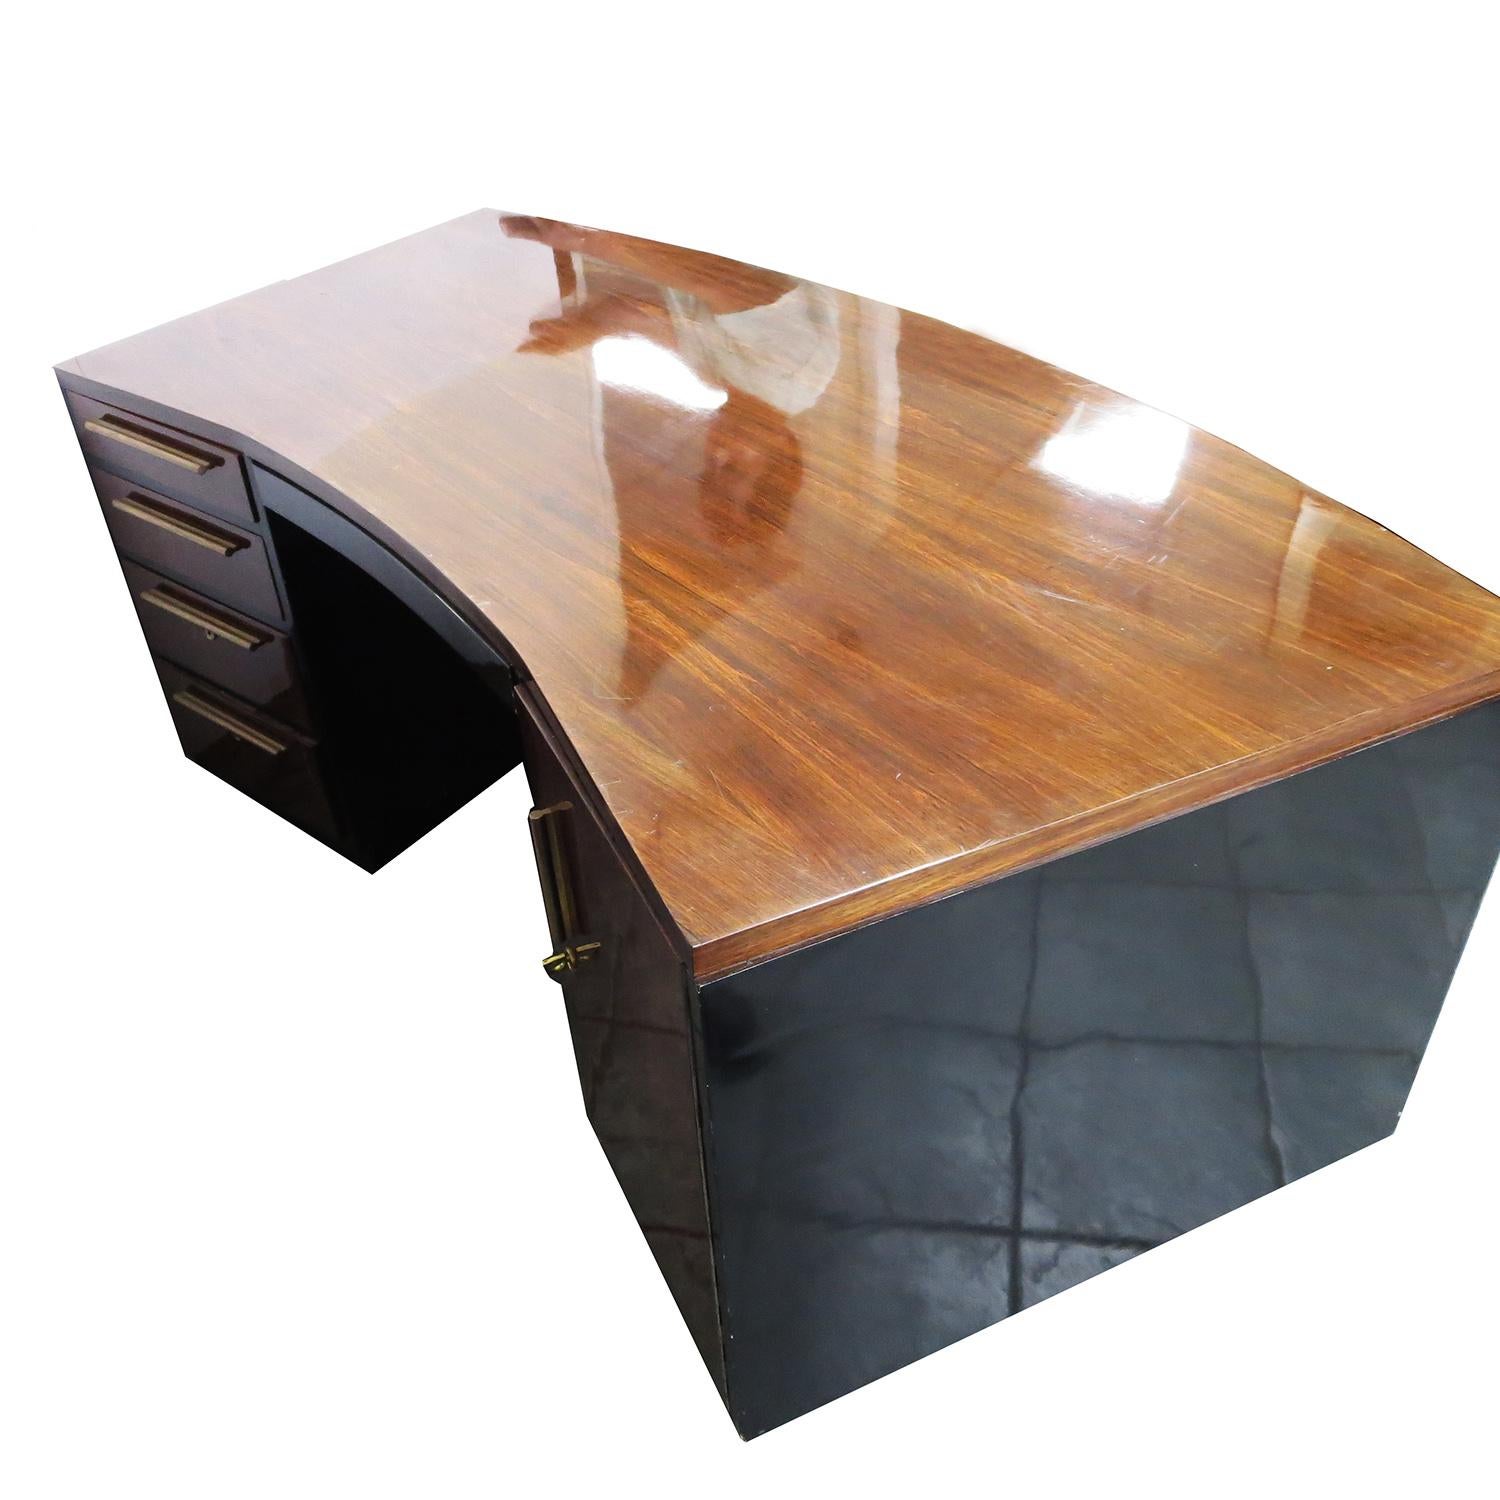 Lacquered Art Deco Desk in Walnut and Black Lacquer